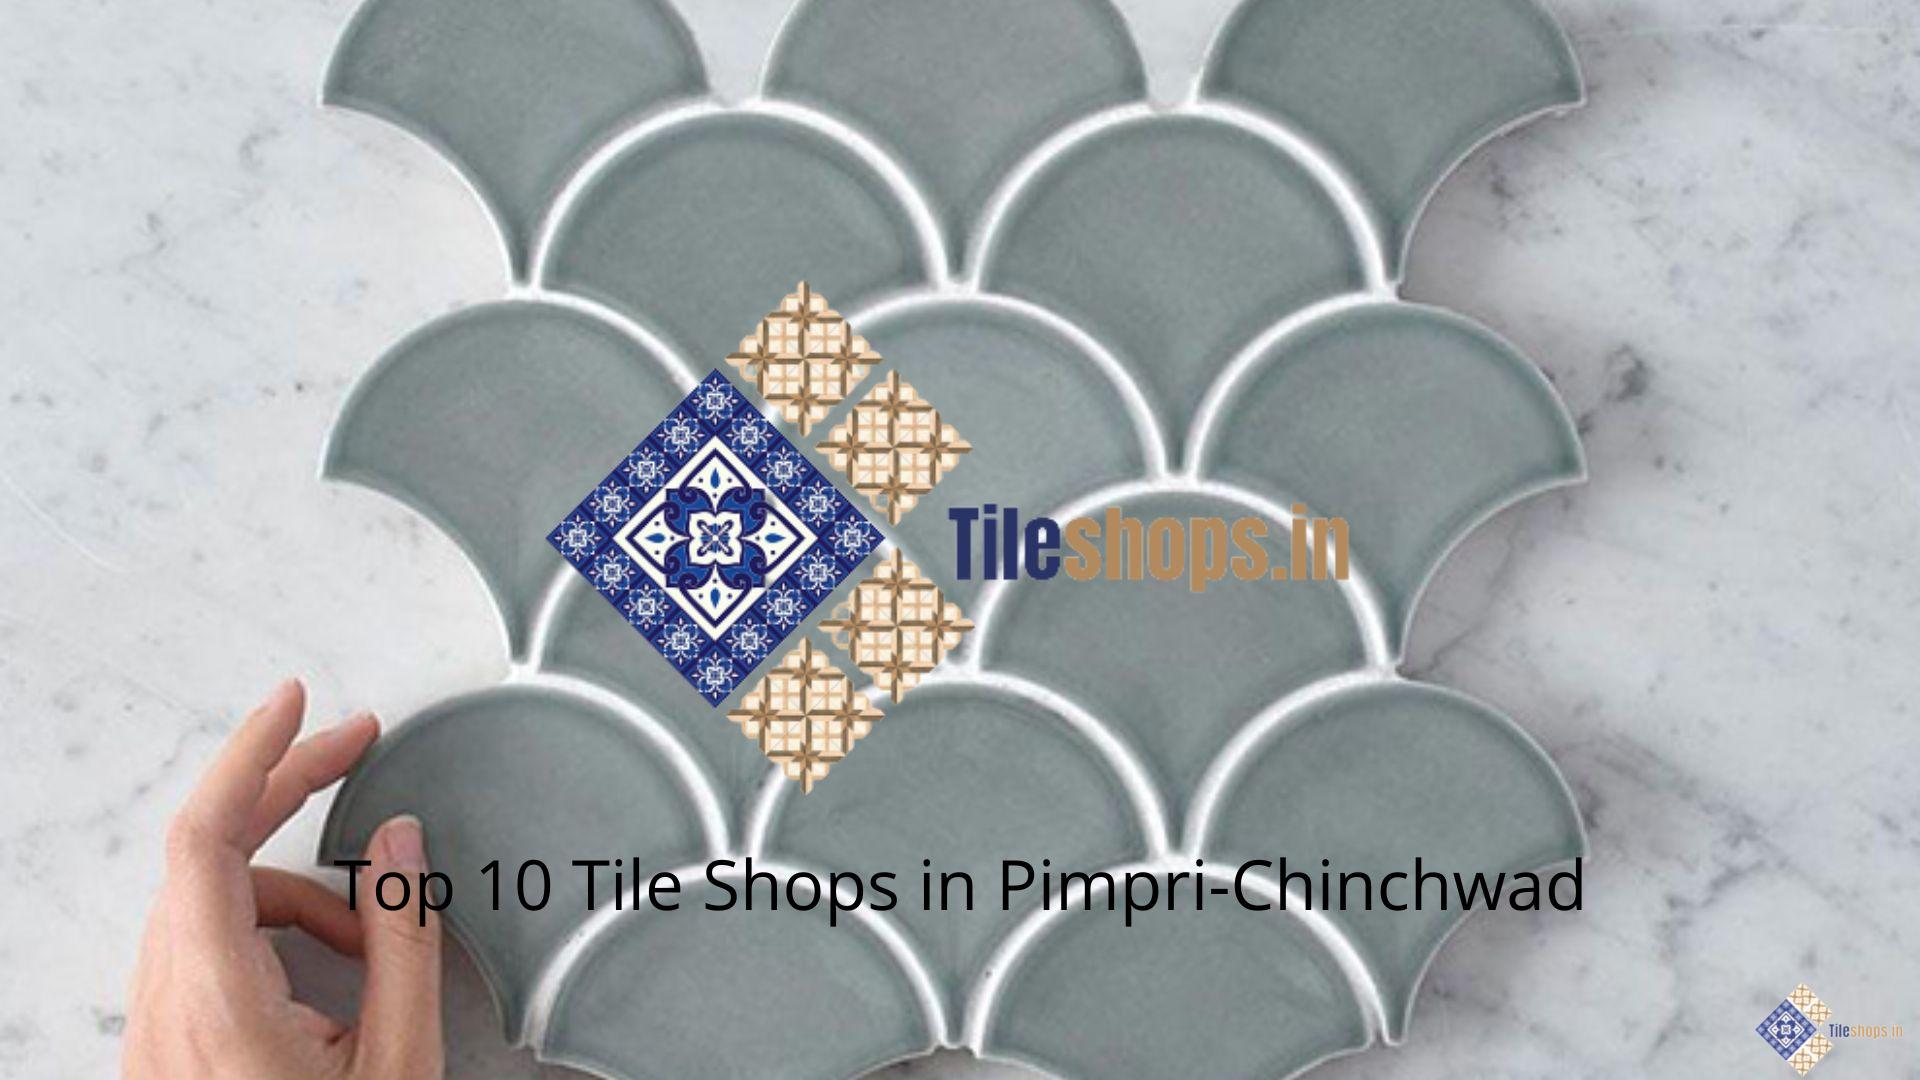 Top 10 Tile Shops in Pimpri-Chinchwad